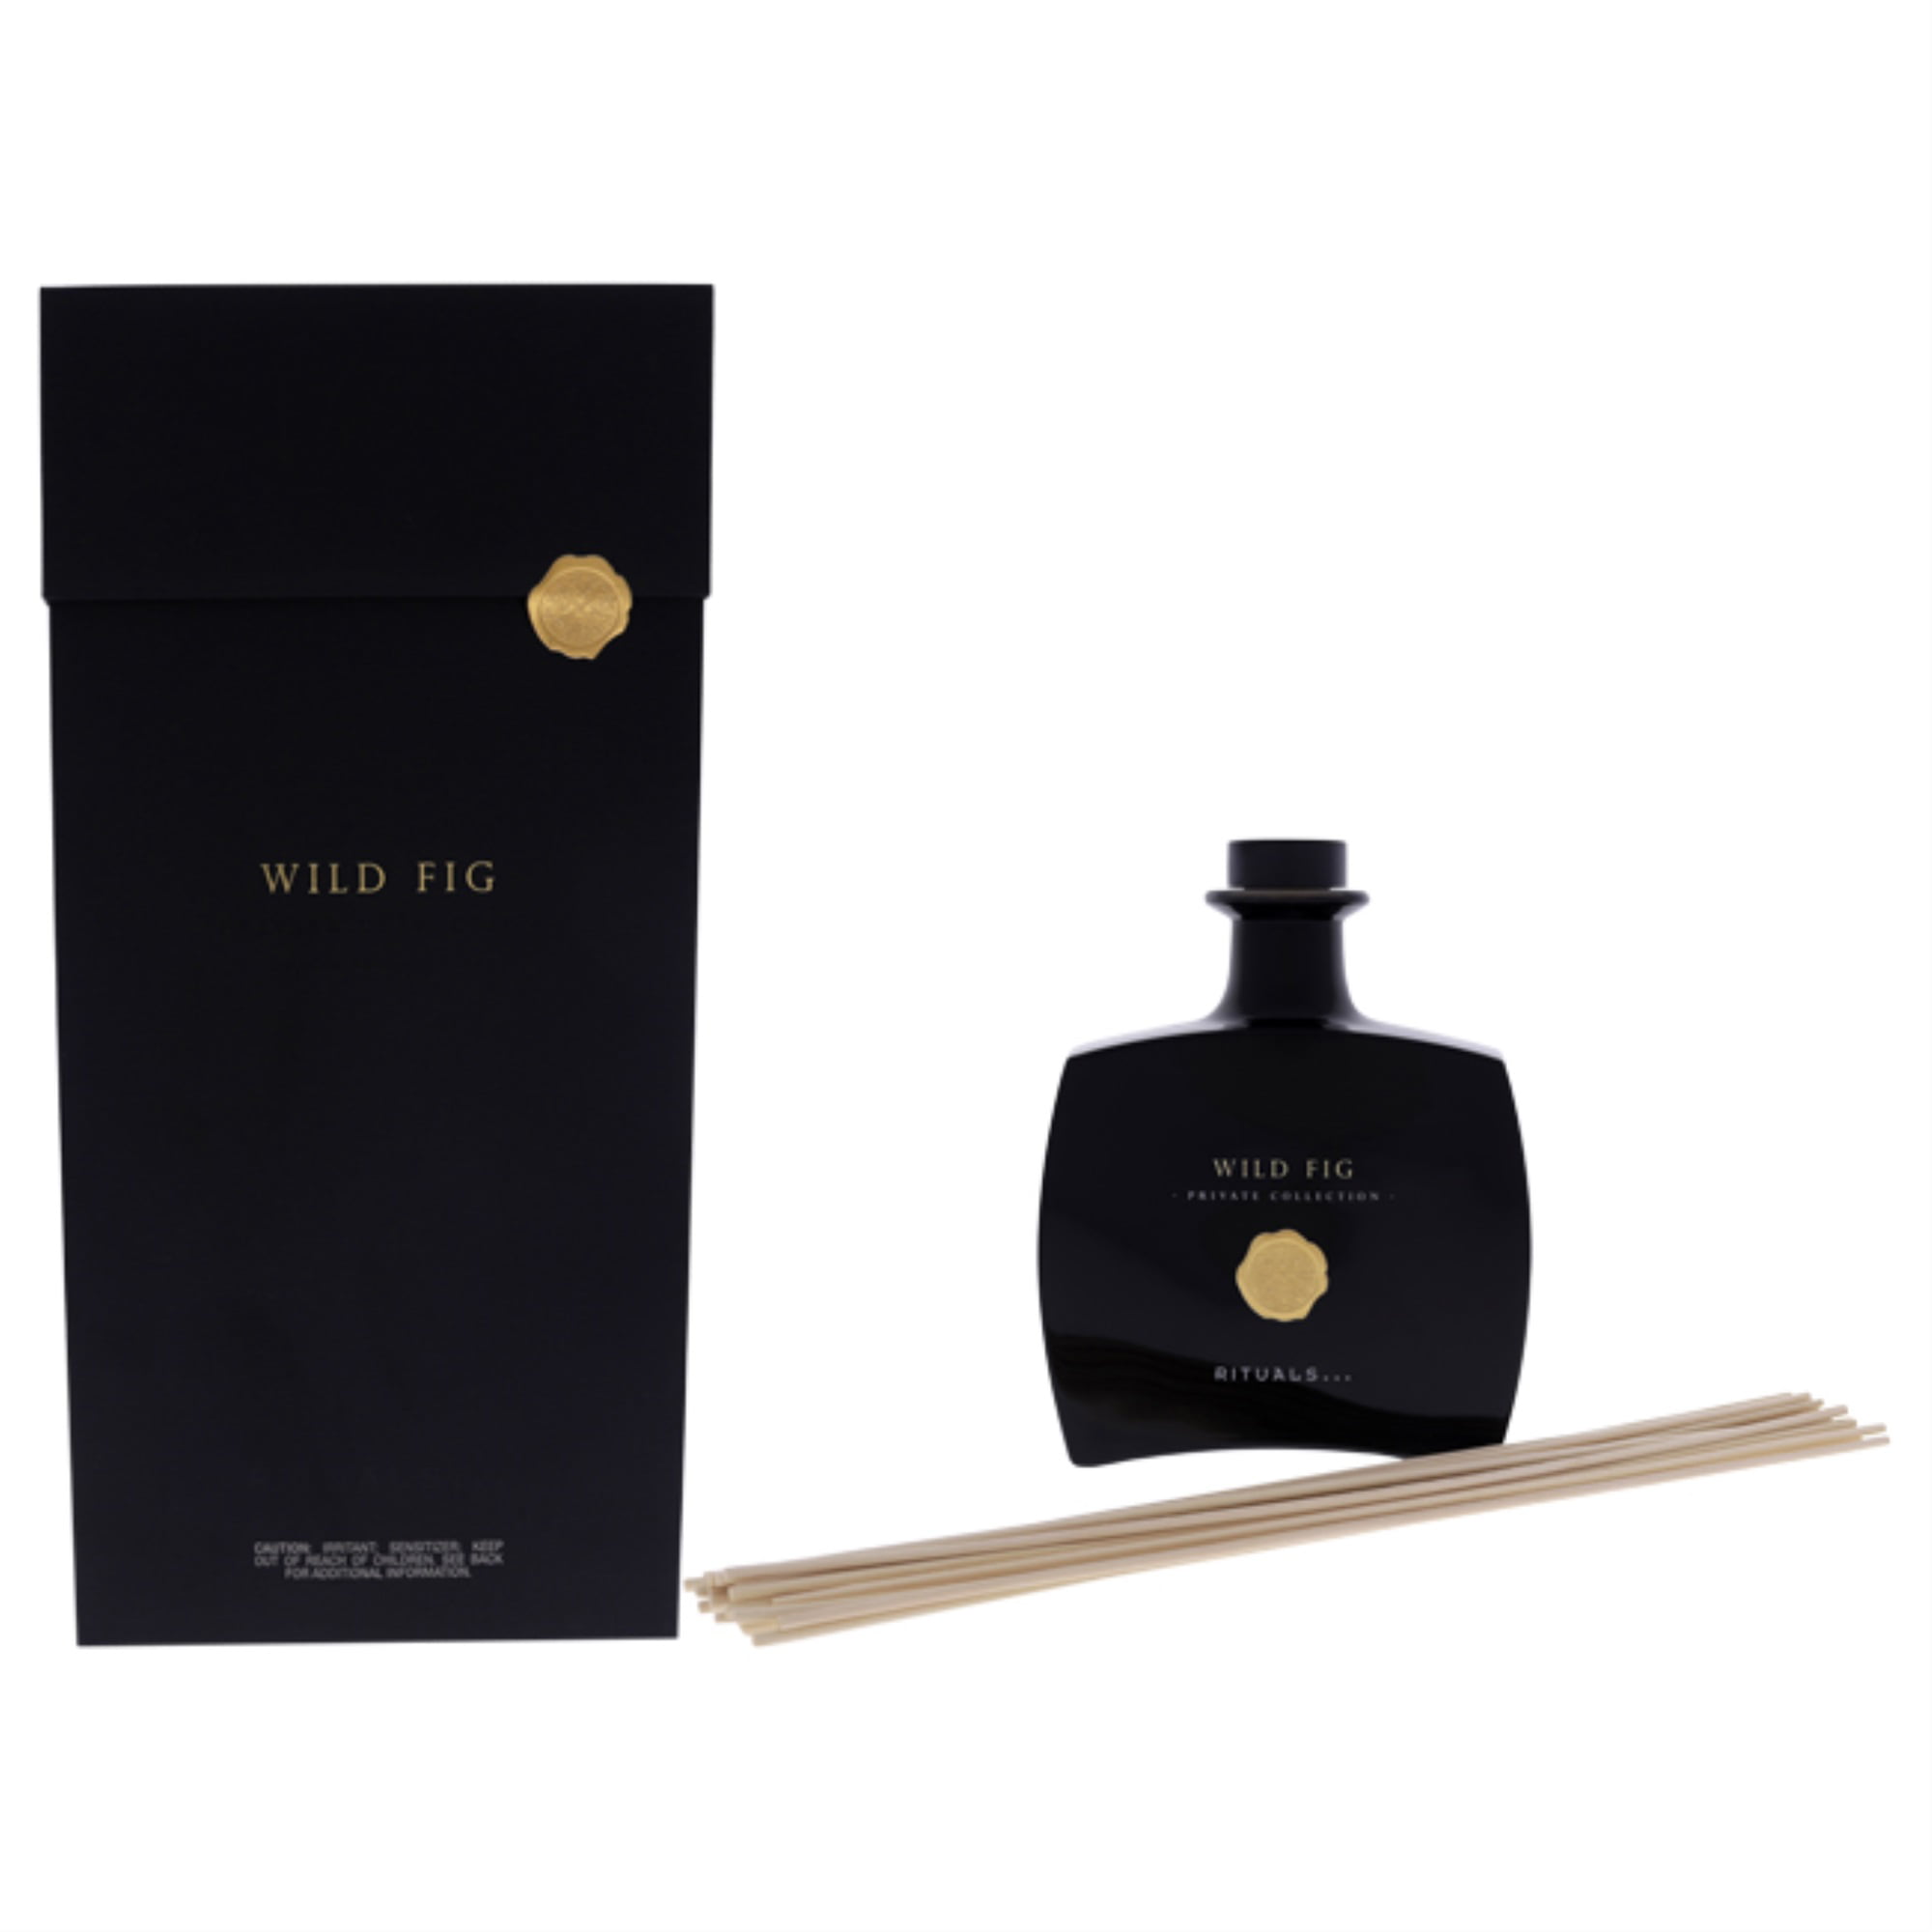 Rituals Private Collection Fragrance Sticks - Black Oudh 450ml